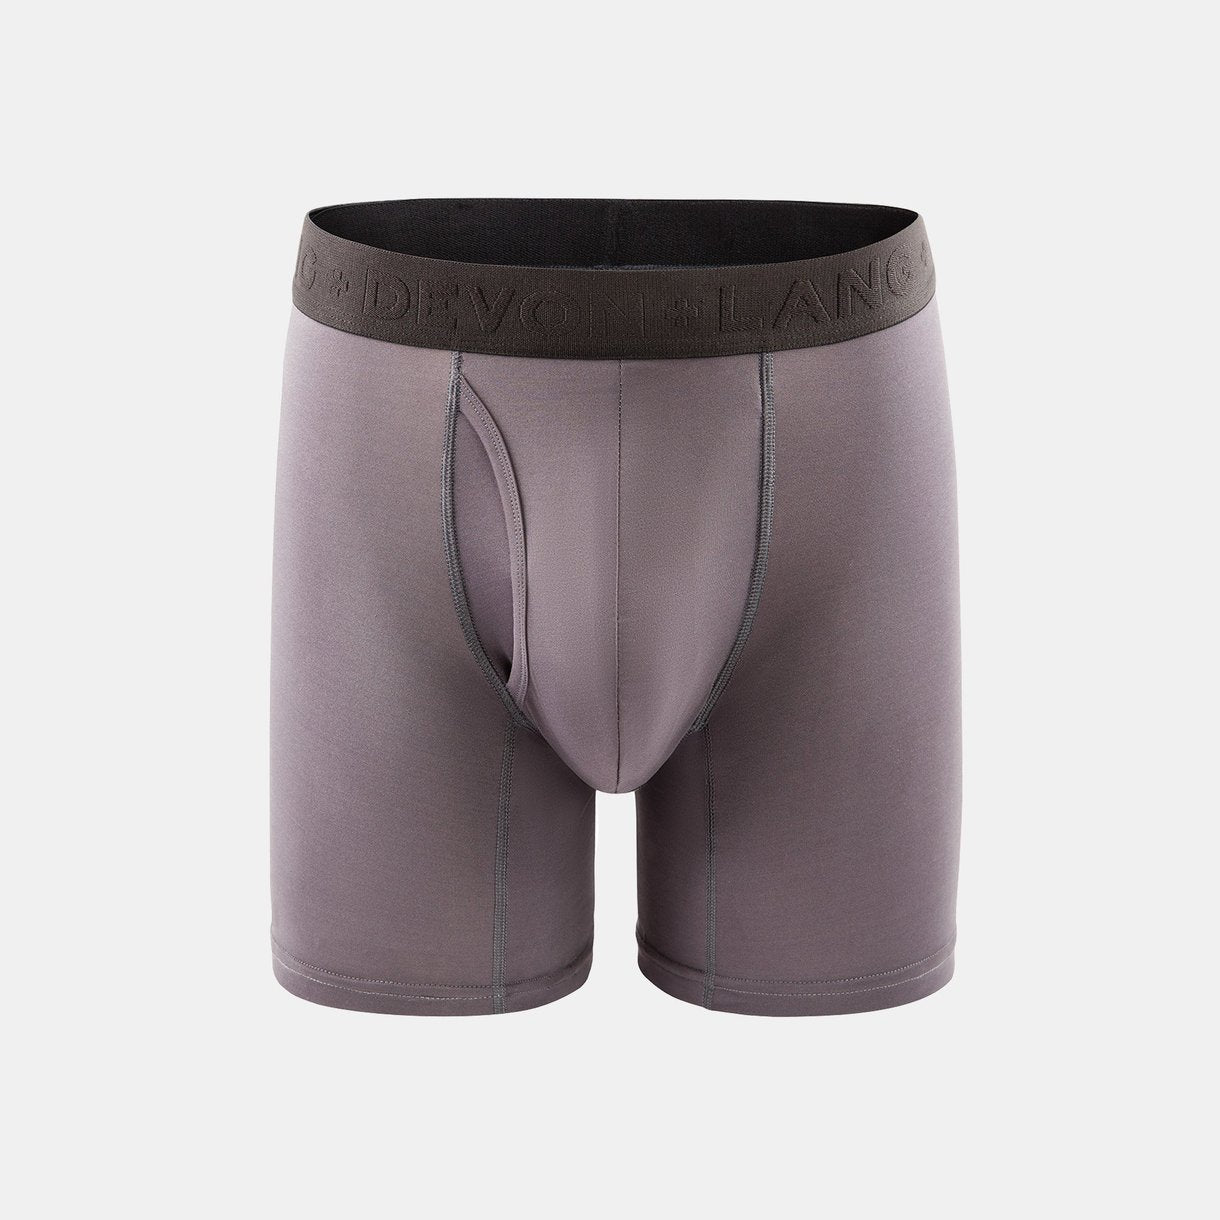 C-IN2 Underwear - H+A+R+D Hustle Brief Dog Tag Grey (Online Only)